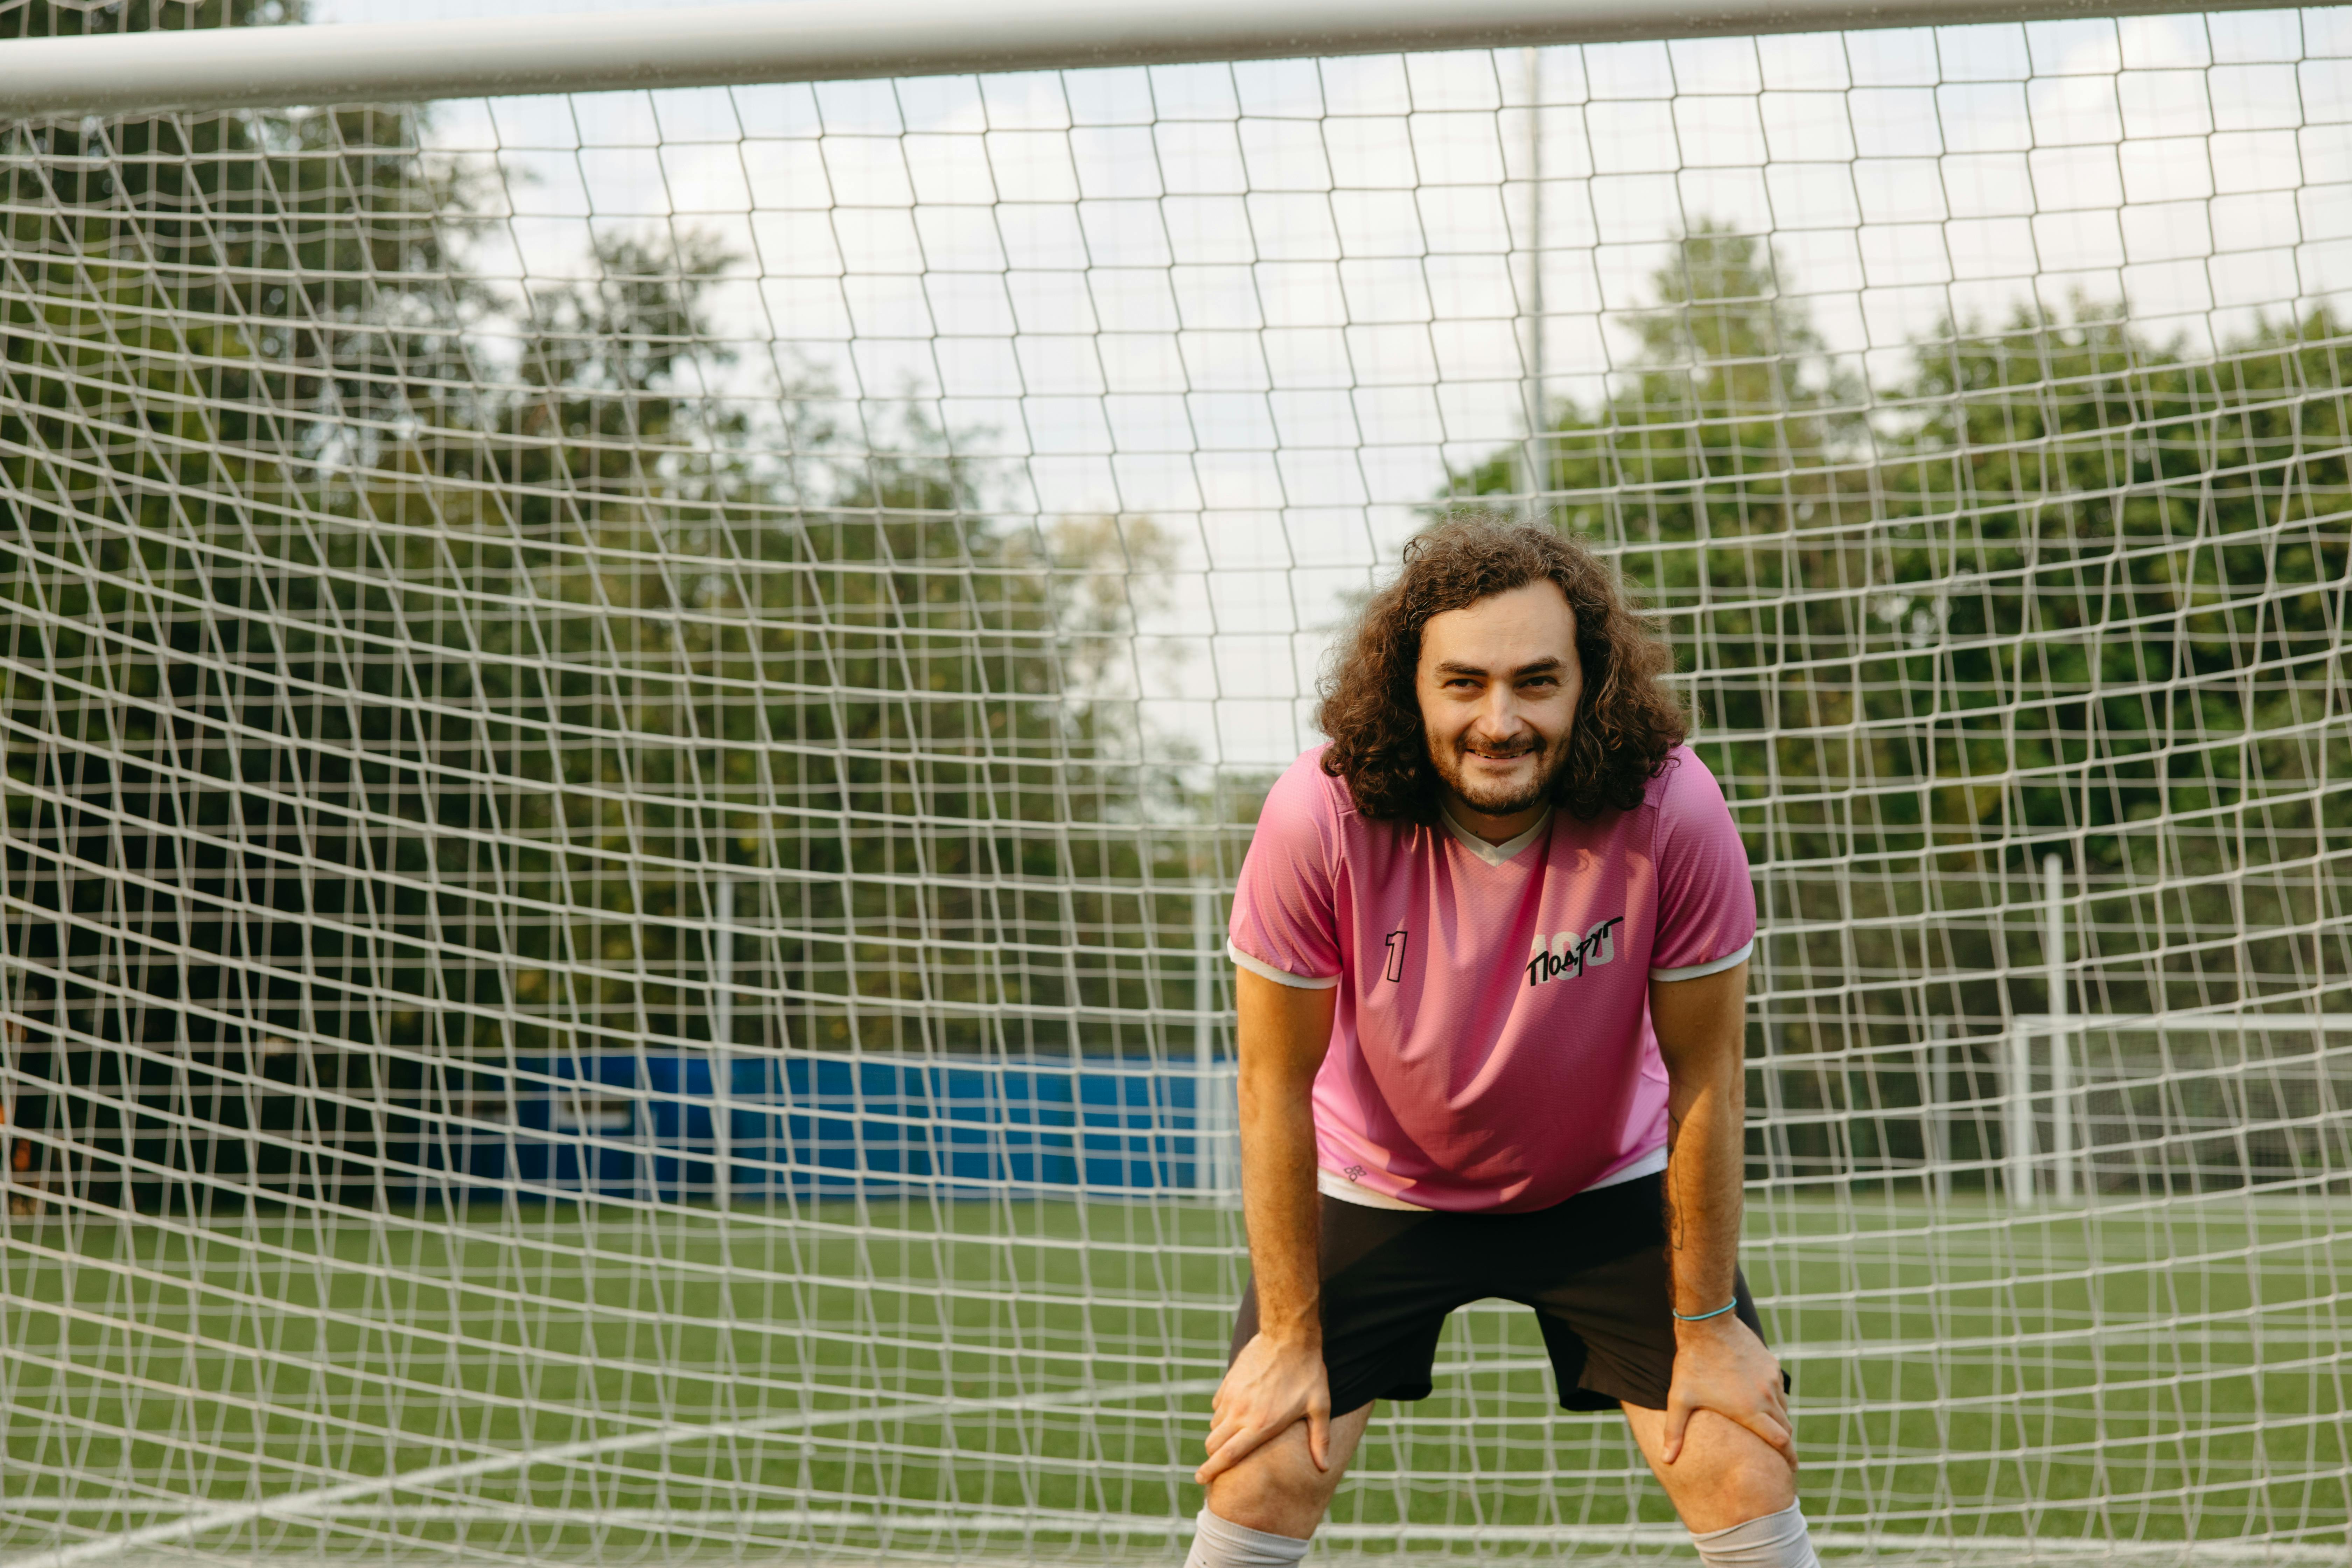 man in pink sport uniform squatting near net